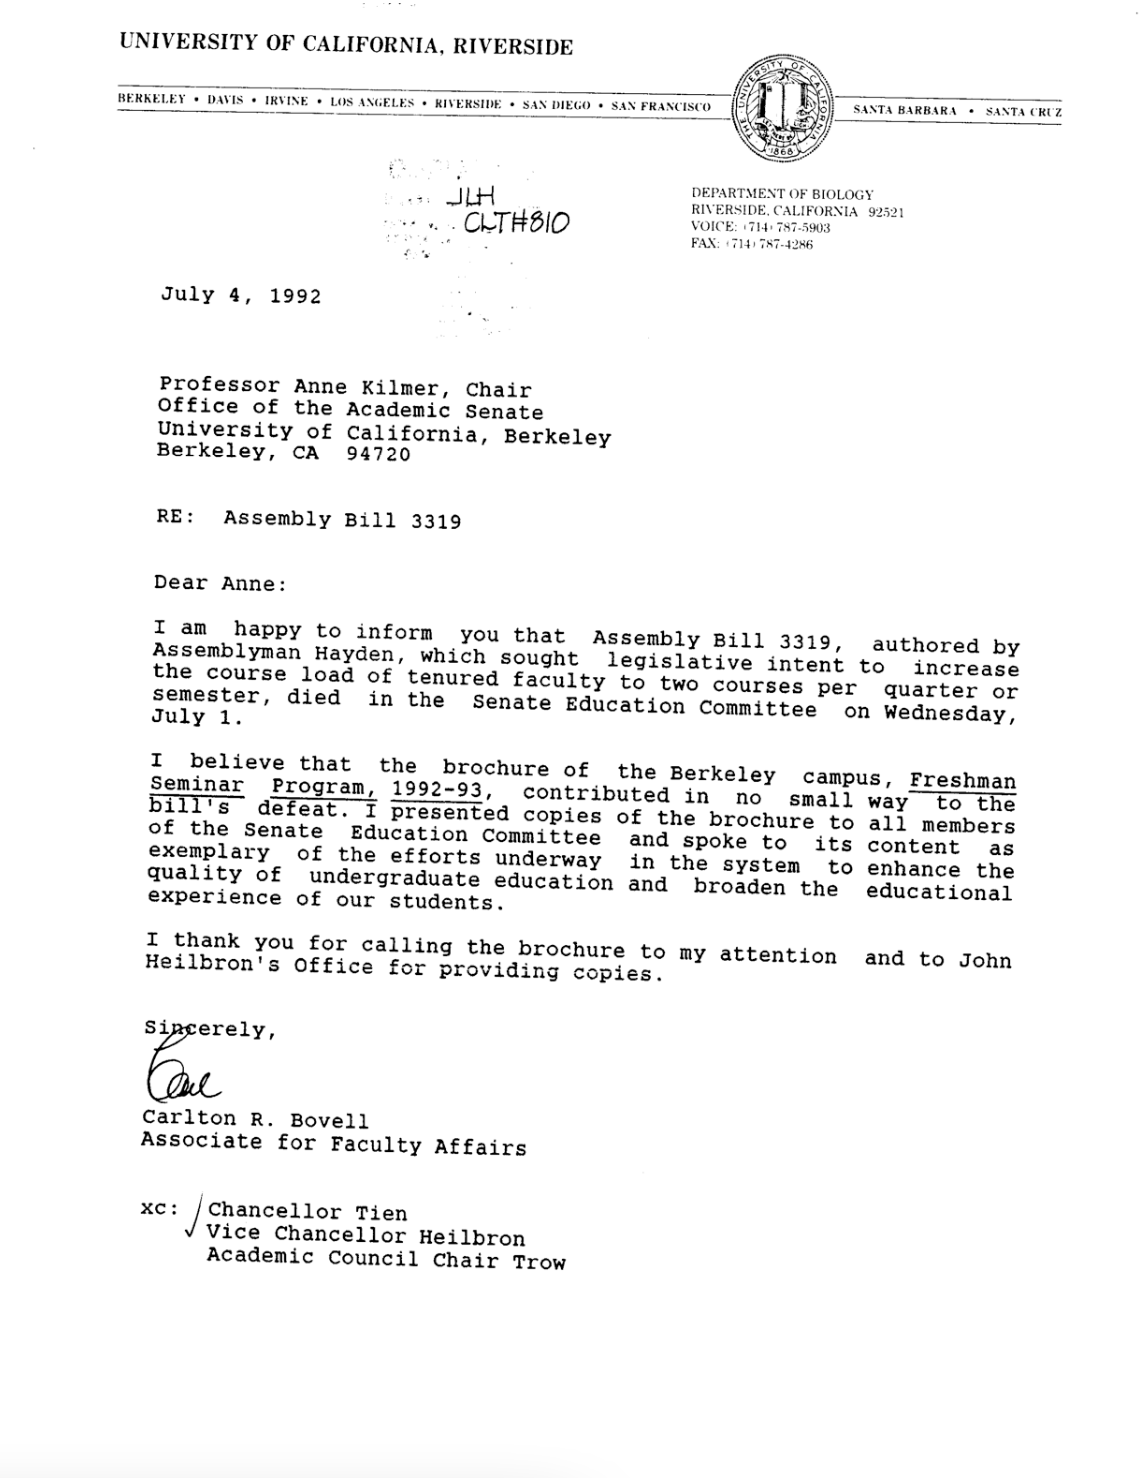 Letter from Carlton R. Bovell to Anne Kilmer, dated July 4, 1992